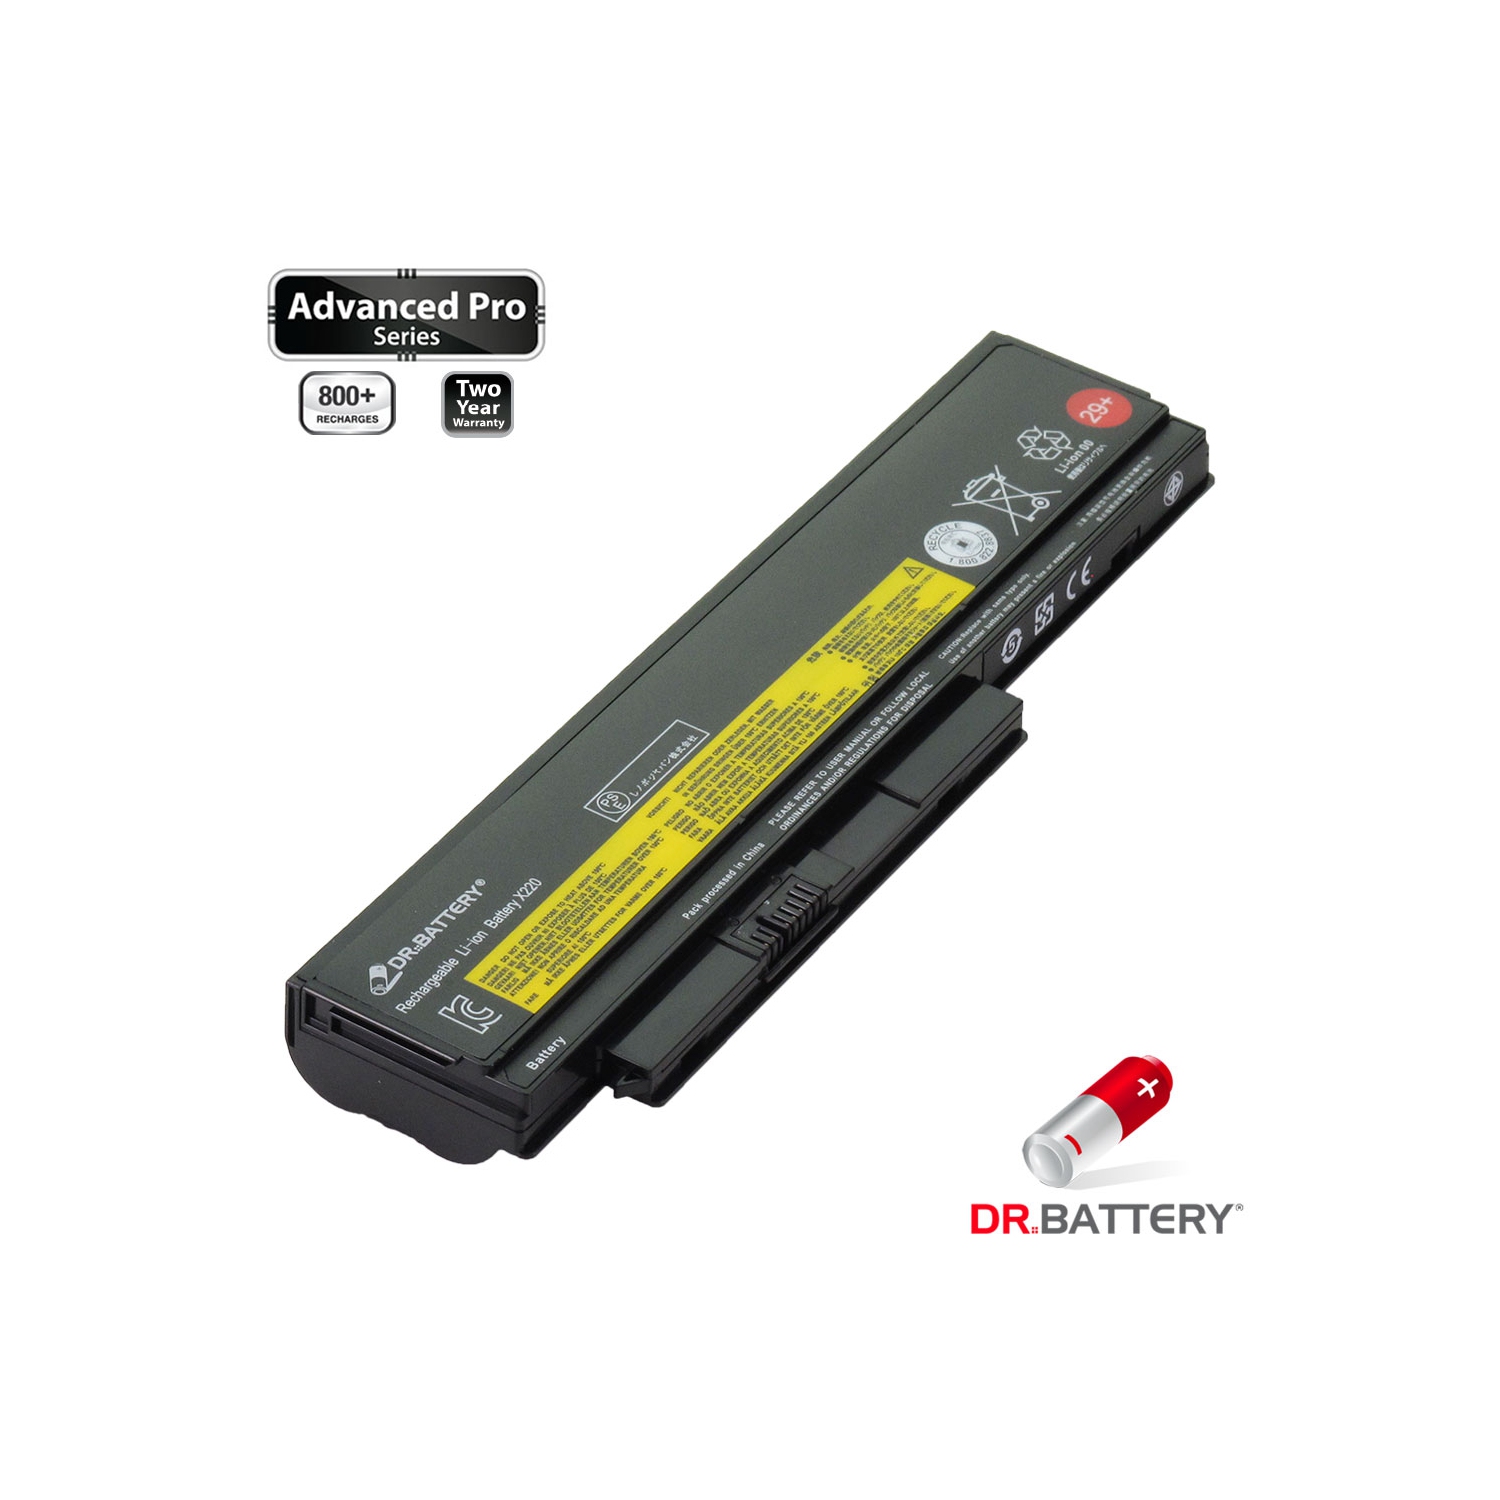 Dr. Battery - Samsung SDI Cells for Lenovo ThinkPad X220 4292 / X220 4293 / X220 Series / 42Y4834 / 42Y4864 - Free Shipping